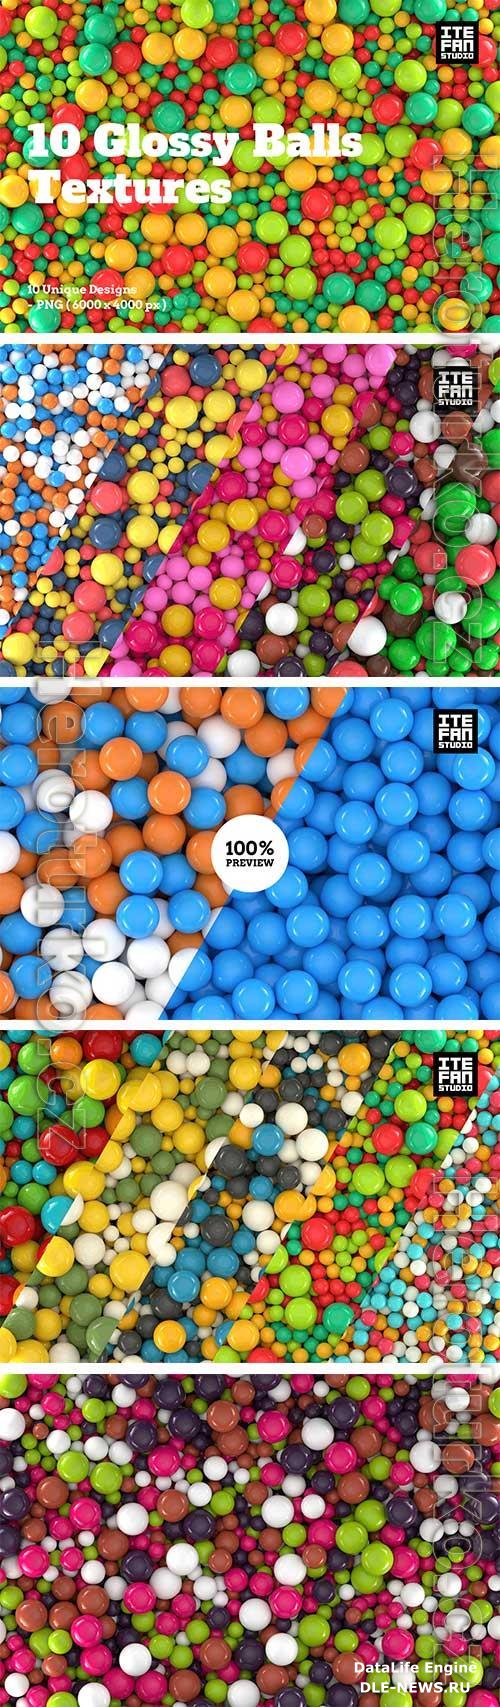 10 Glossy Balls Textures